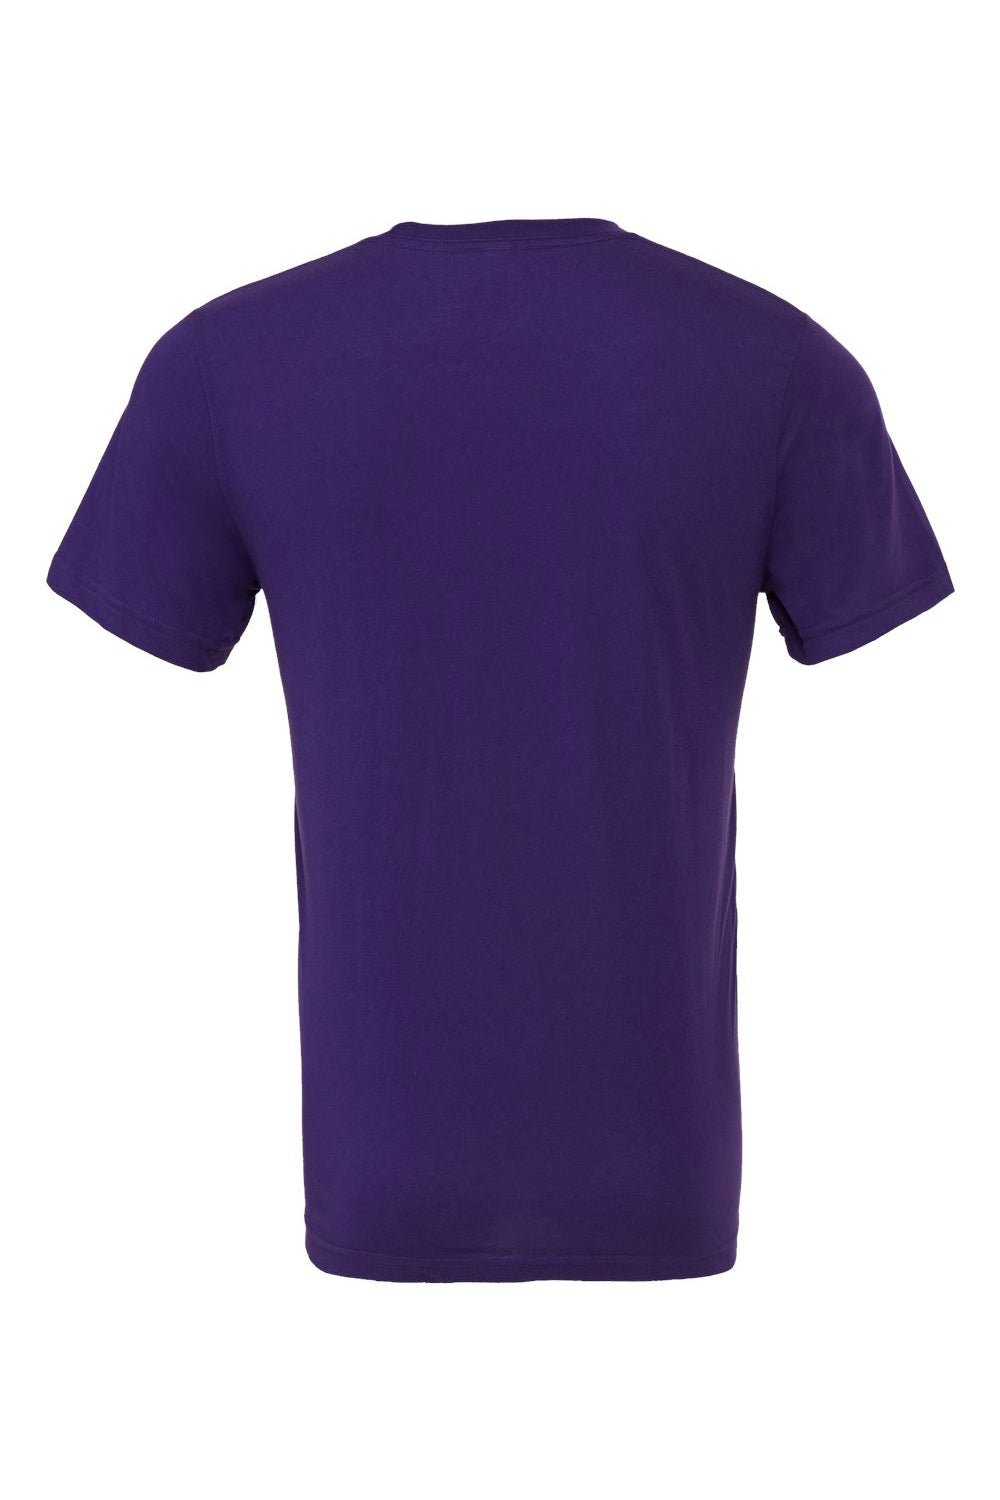 Bella + Canvas BC3001/3001C Mens Jersey Short Sleeve Crewneck T-Shirt Team Purple Flat Back